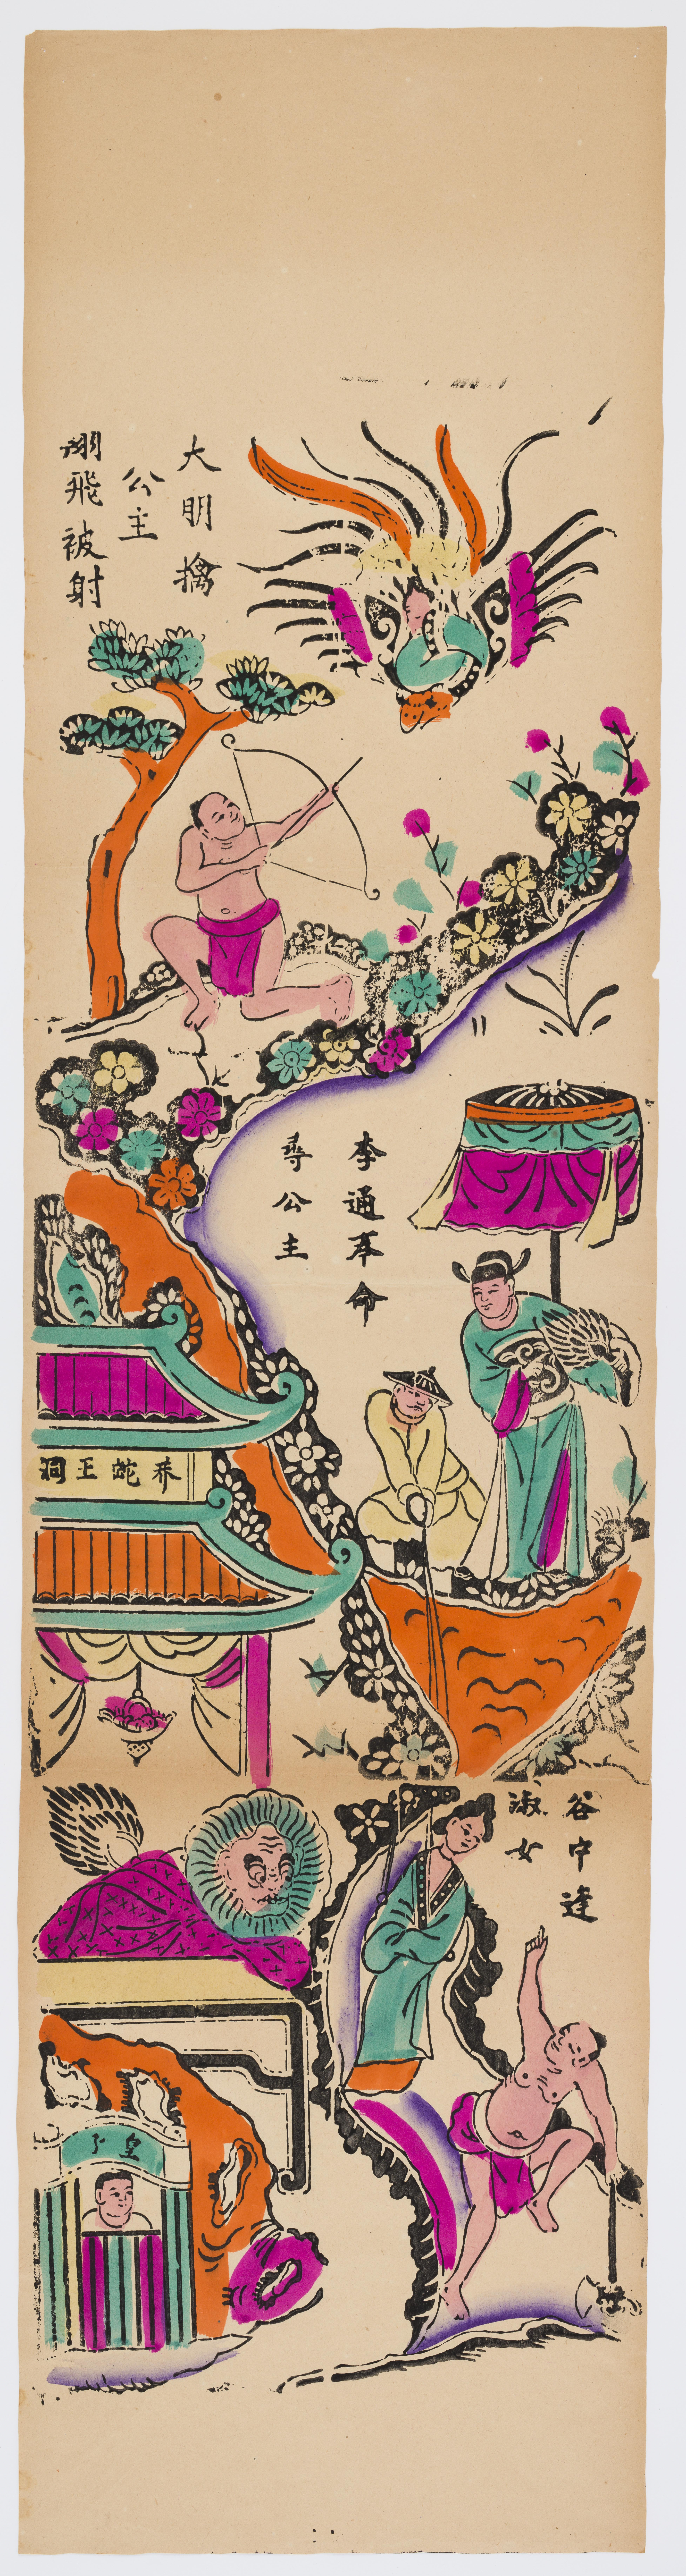 A colourful Vietnamese poster depicting a mythological folk narrative.